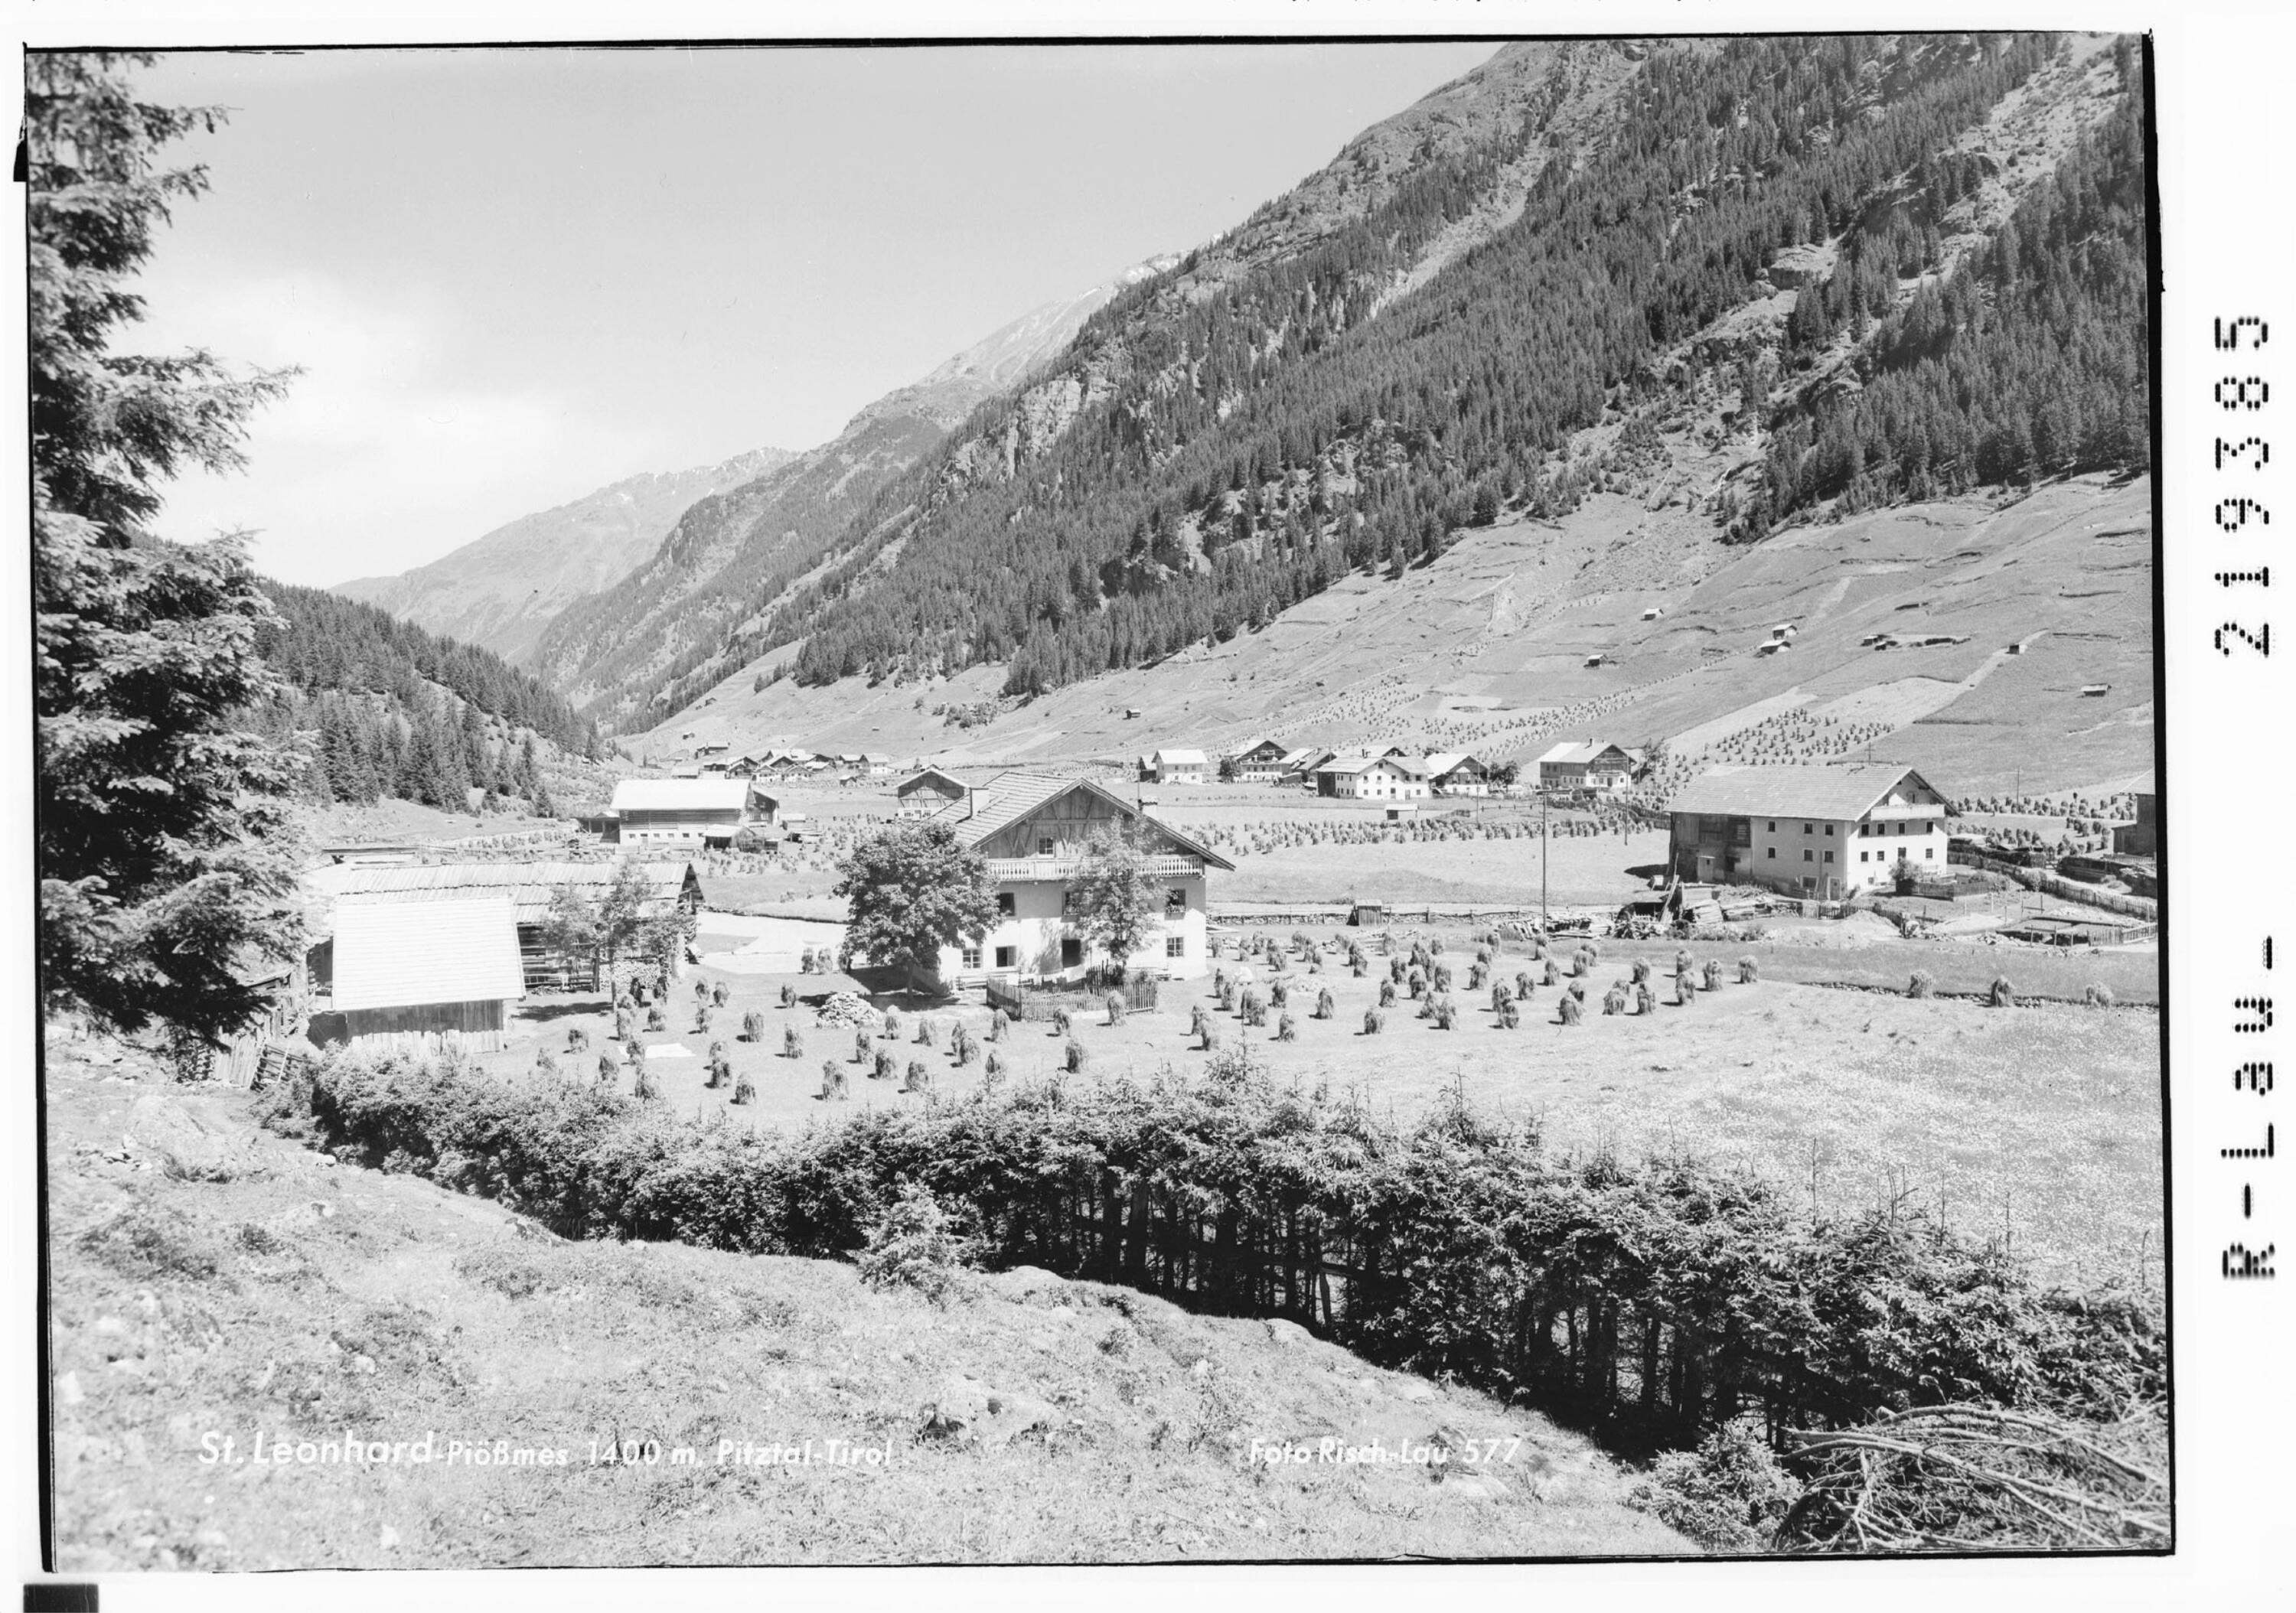 St.Leonhard - Piössmes 1400 m, Pitztal in Tirol></div>


    <hr>
    <div class=